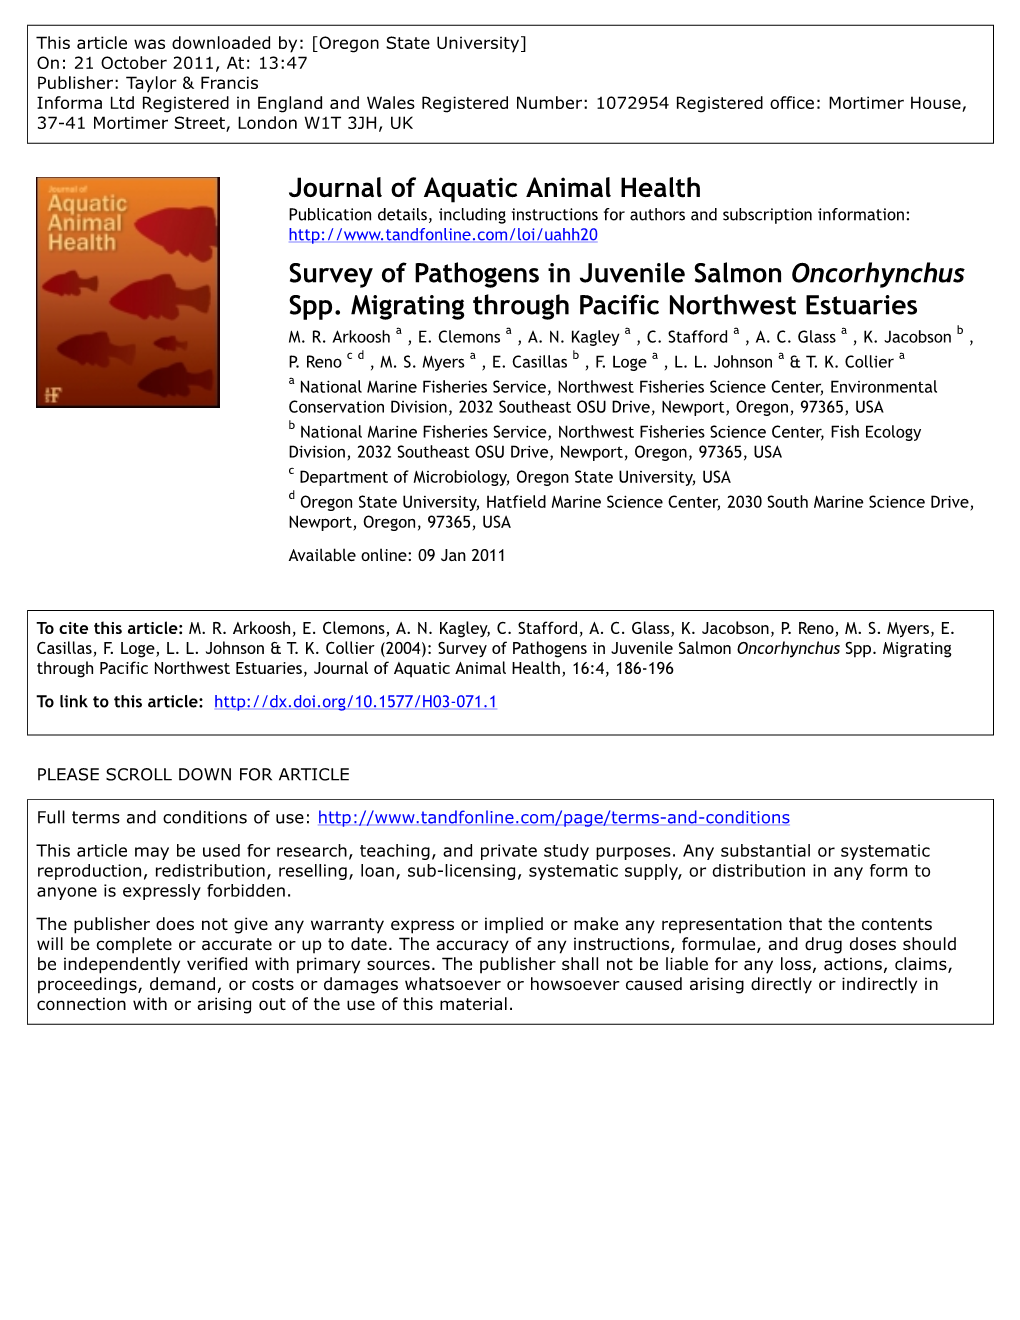 Survey of Pathogens in Juvenile Salmon Oncorhynchus Spp